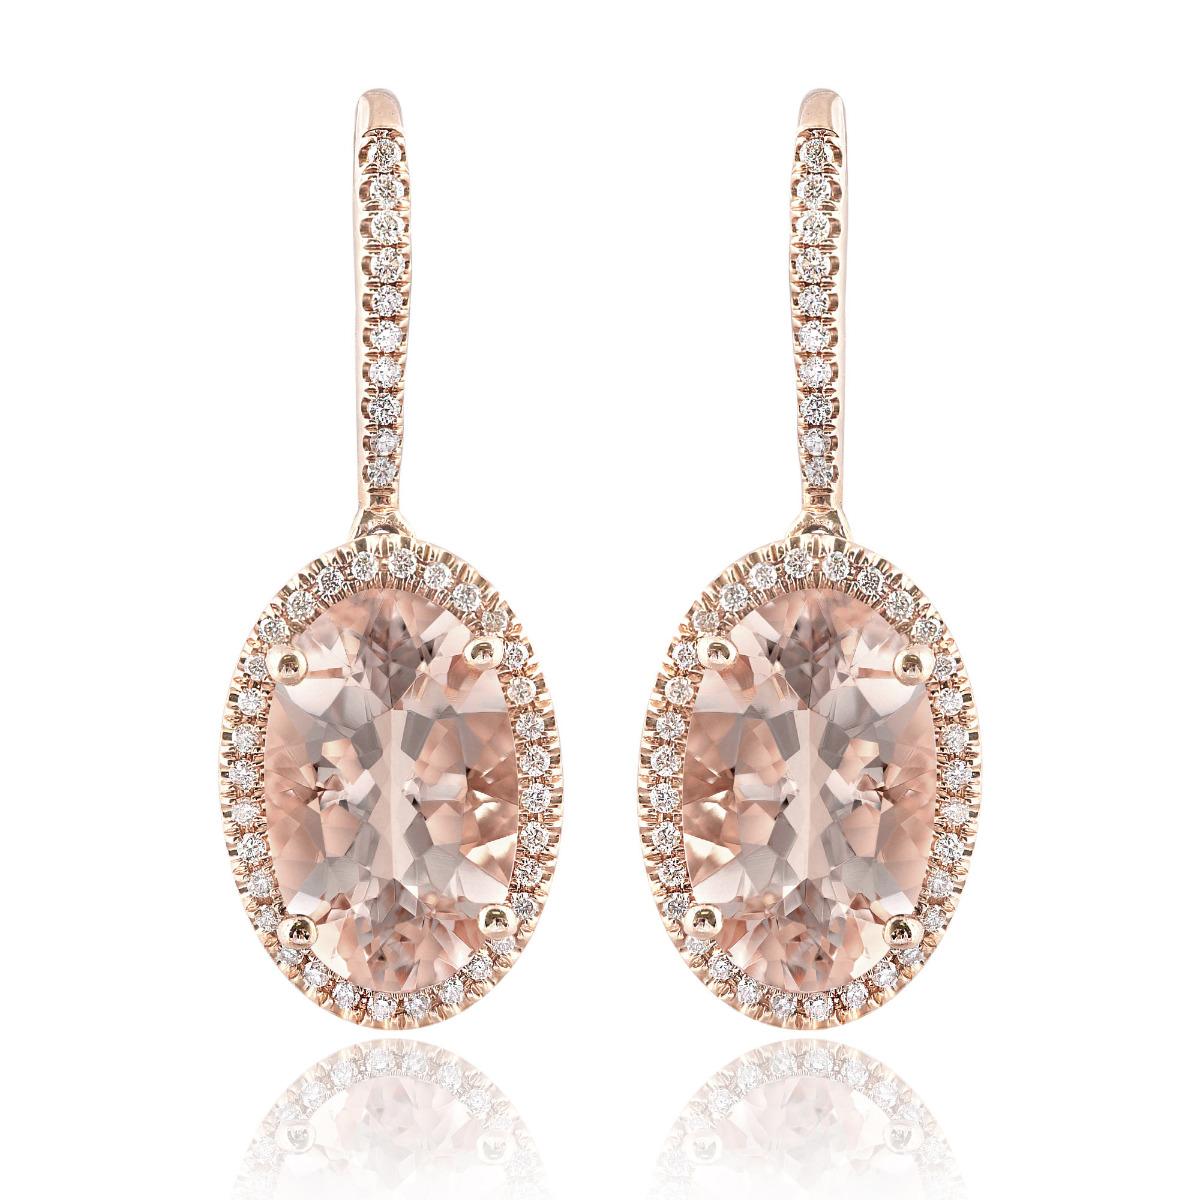 Mixed Cut Natural Morganites 6.21 Carat in Rose Gold Earrings with Diamonds